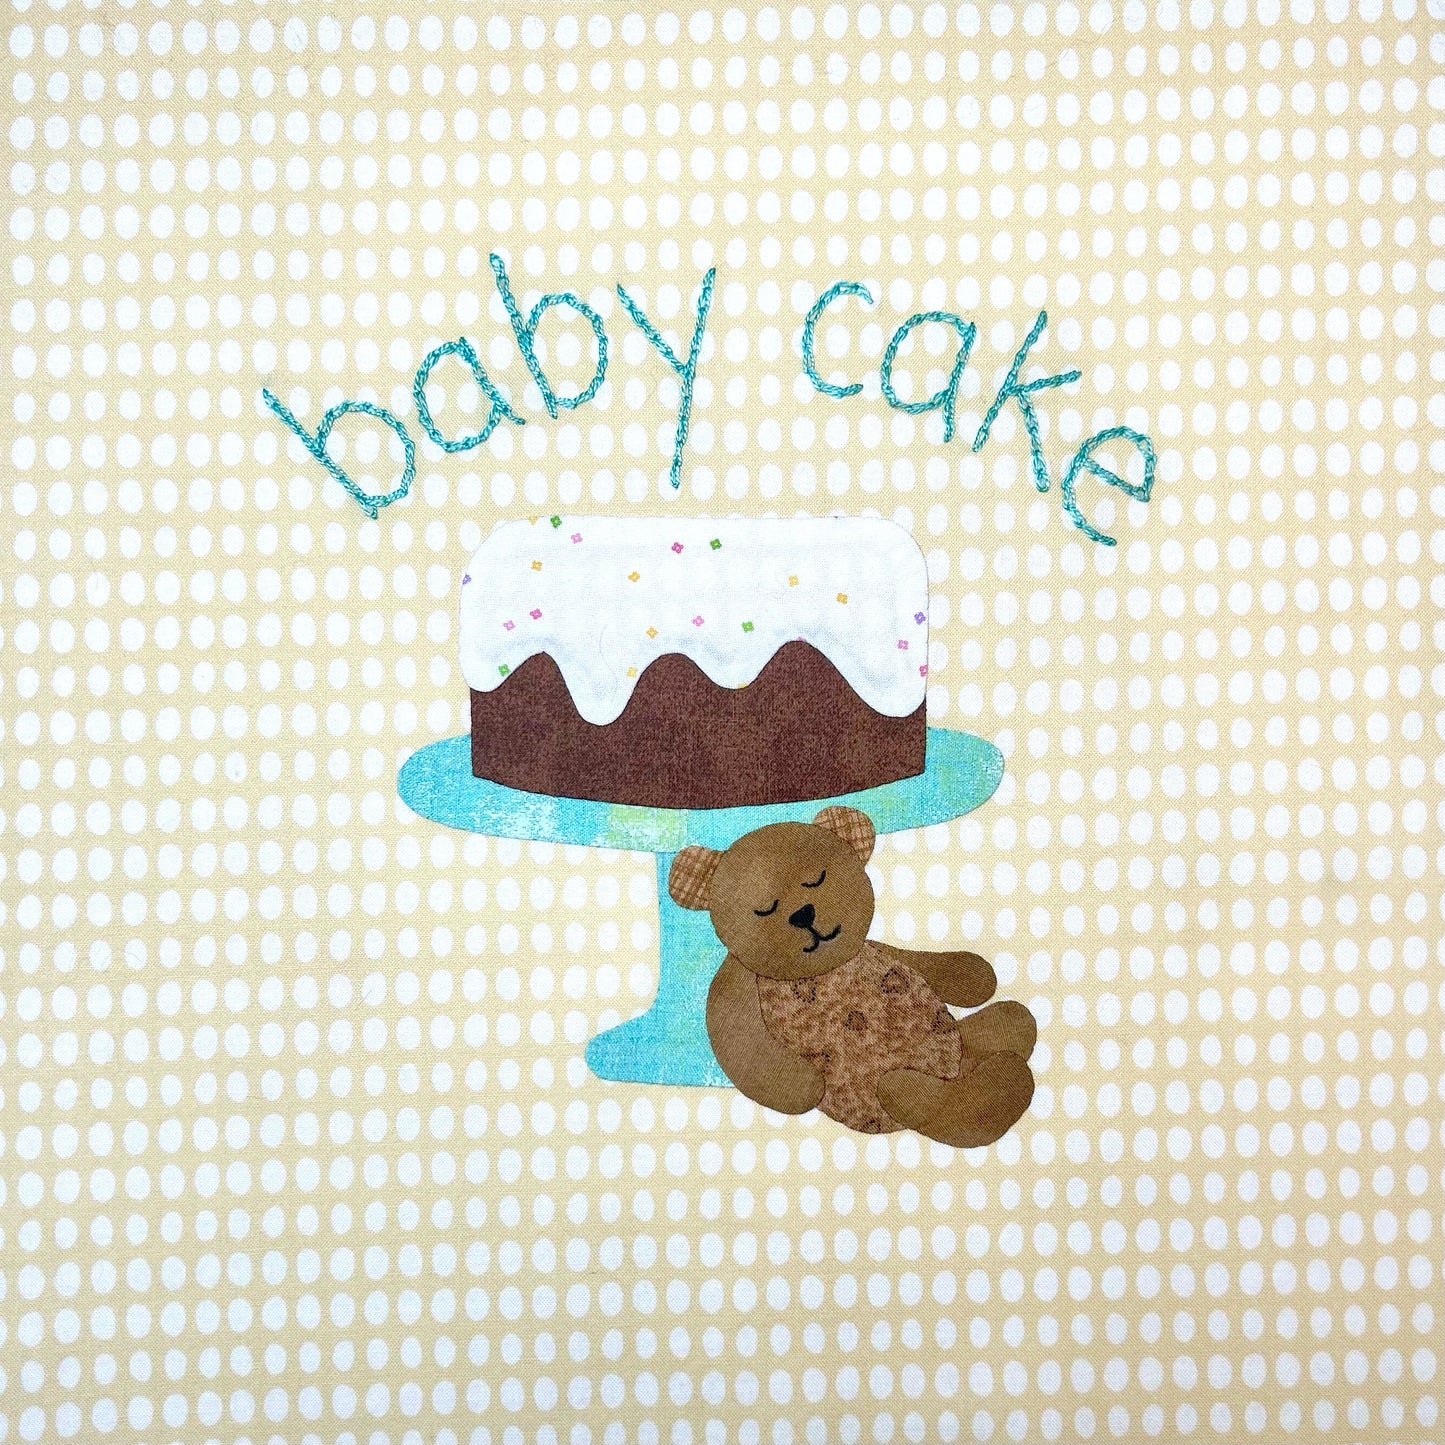 Little Baker Block 4 - Baby Cake Appliqué Pattern PDF Download